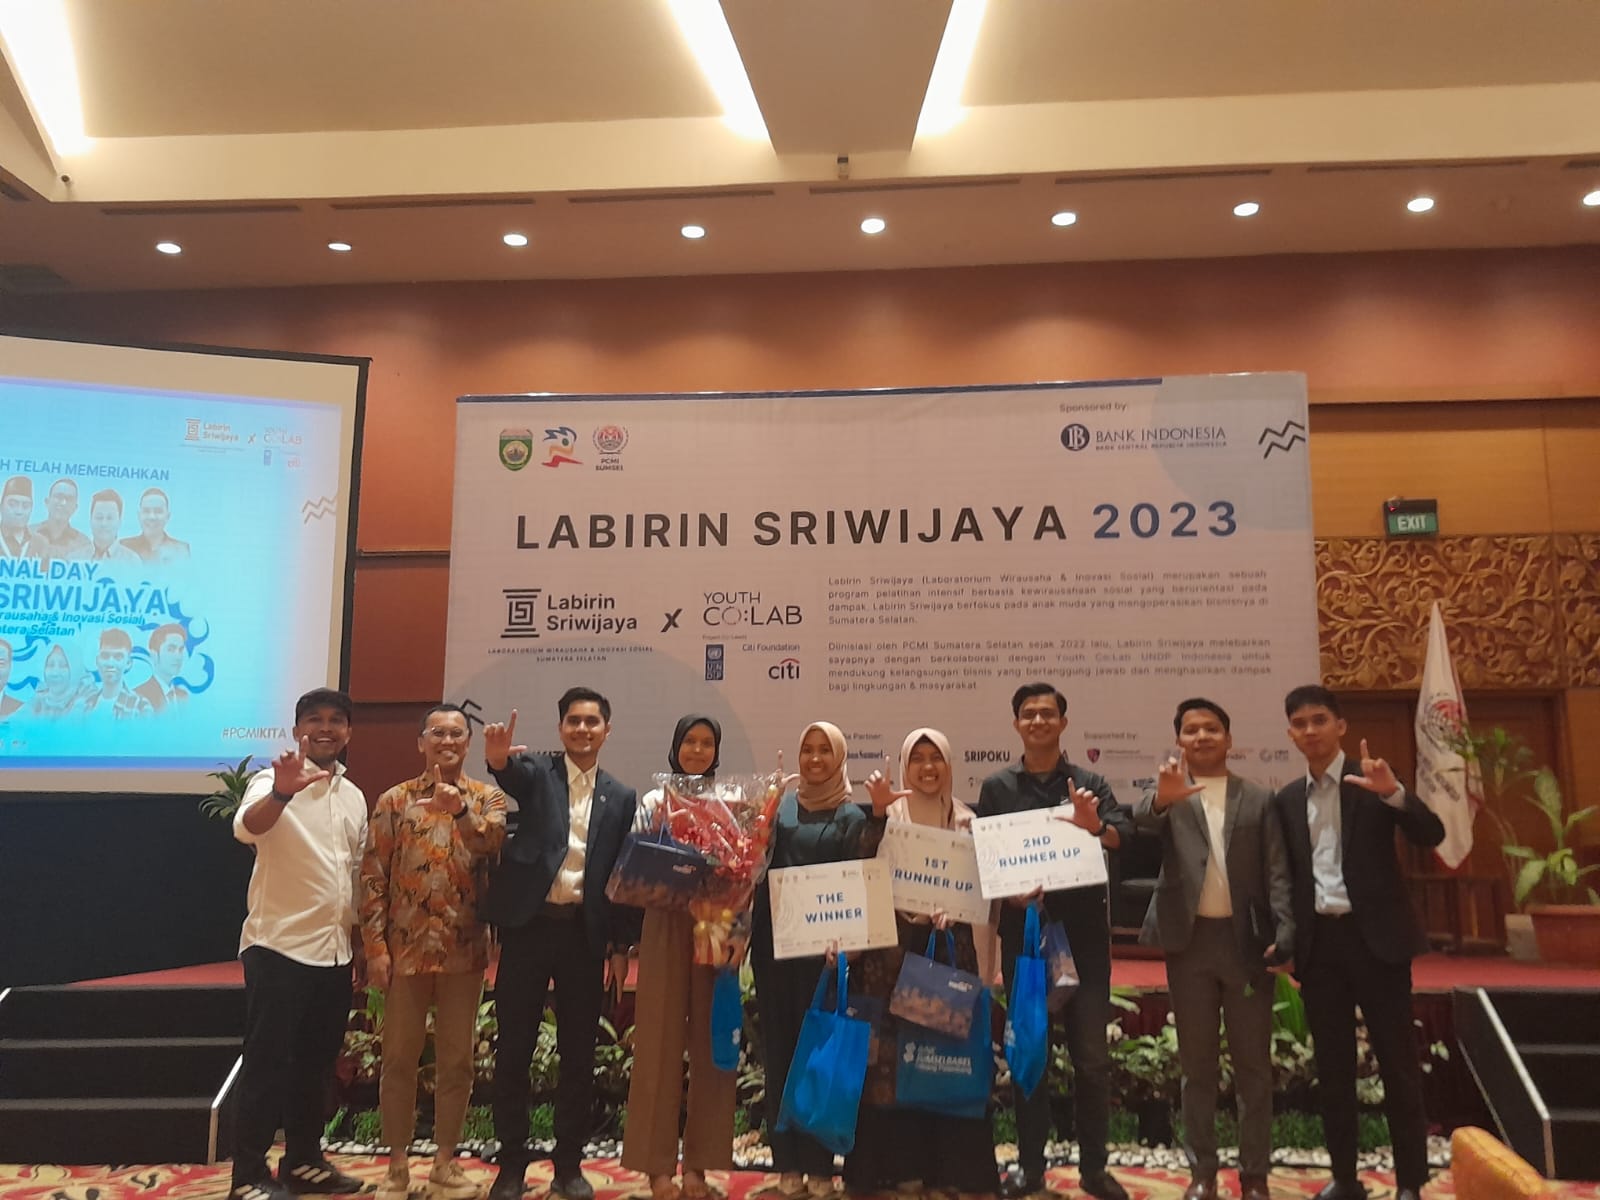 MANTAP! Tim Inovator Center Universitas Bina Darma Palembang Raih Juara 3 Pada Labirin Sriwijaya 2023